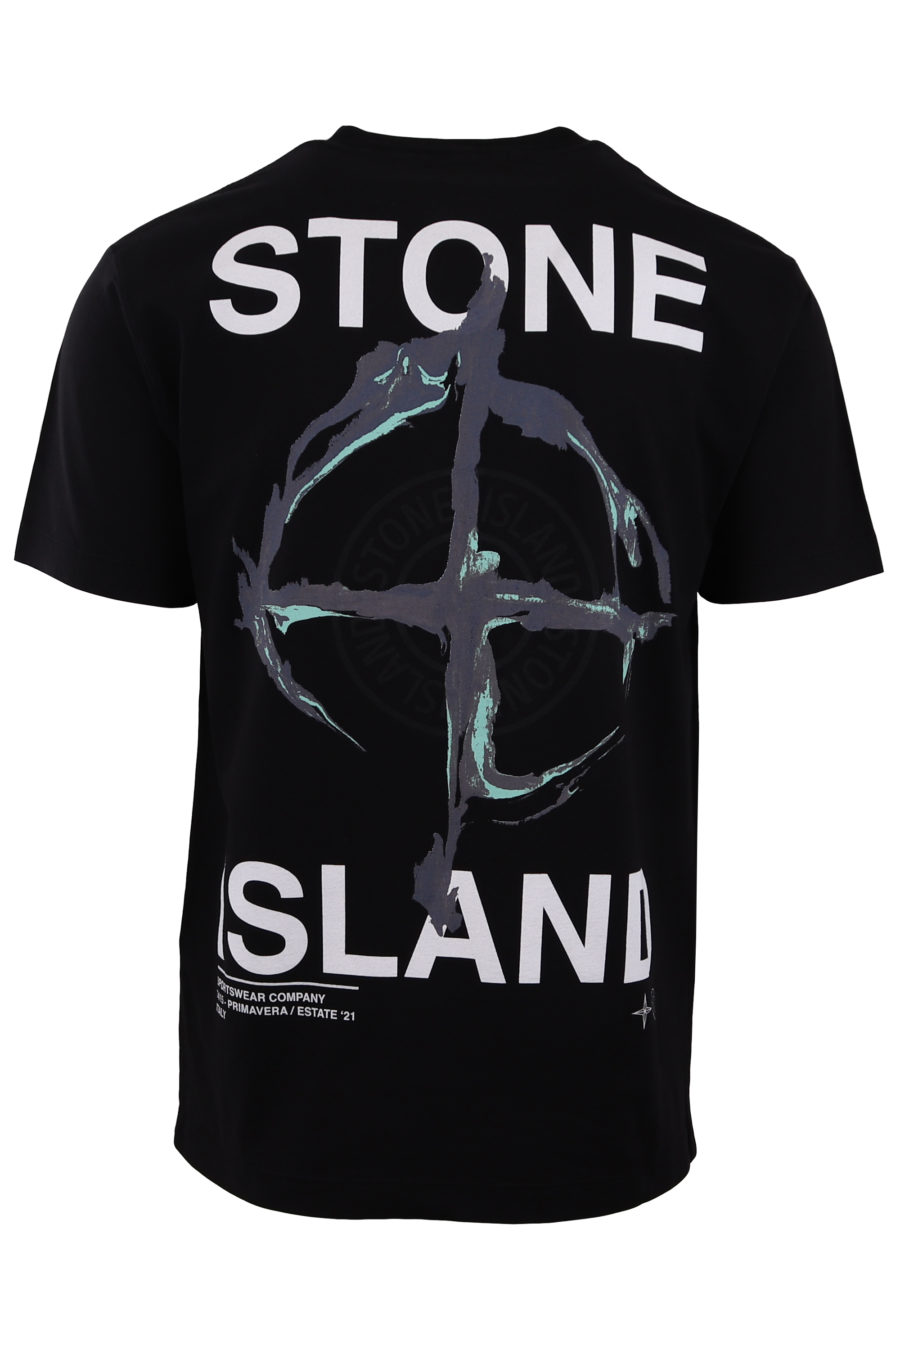 Camiseta Stone Island negra con logo pequeño - IMG 3189